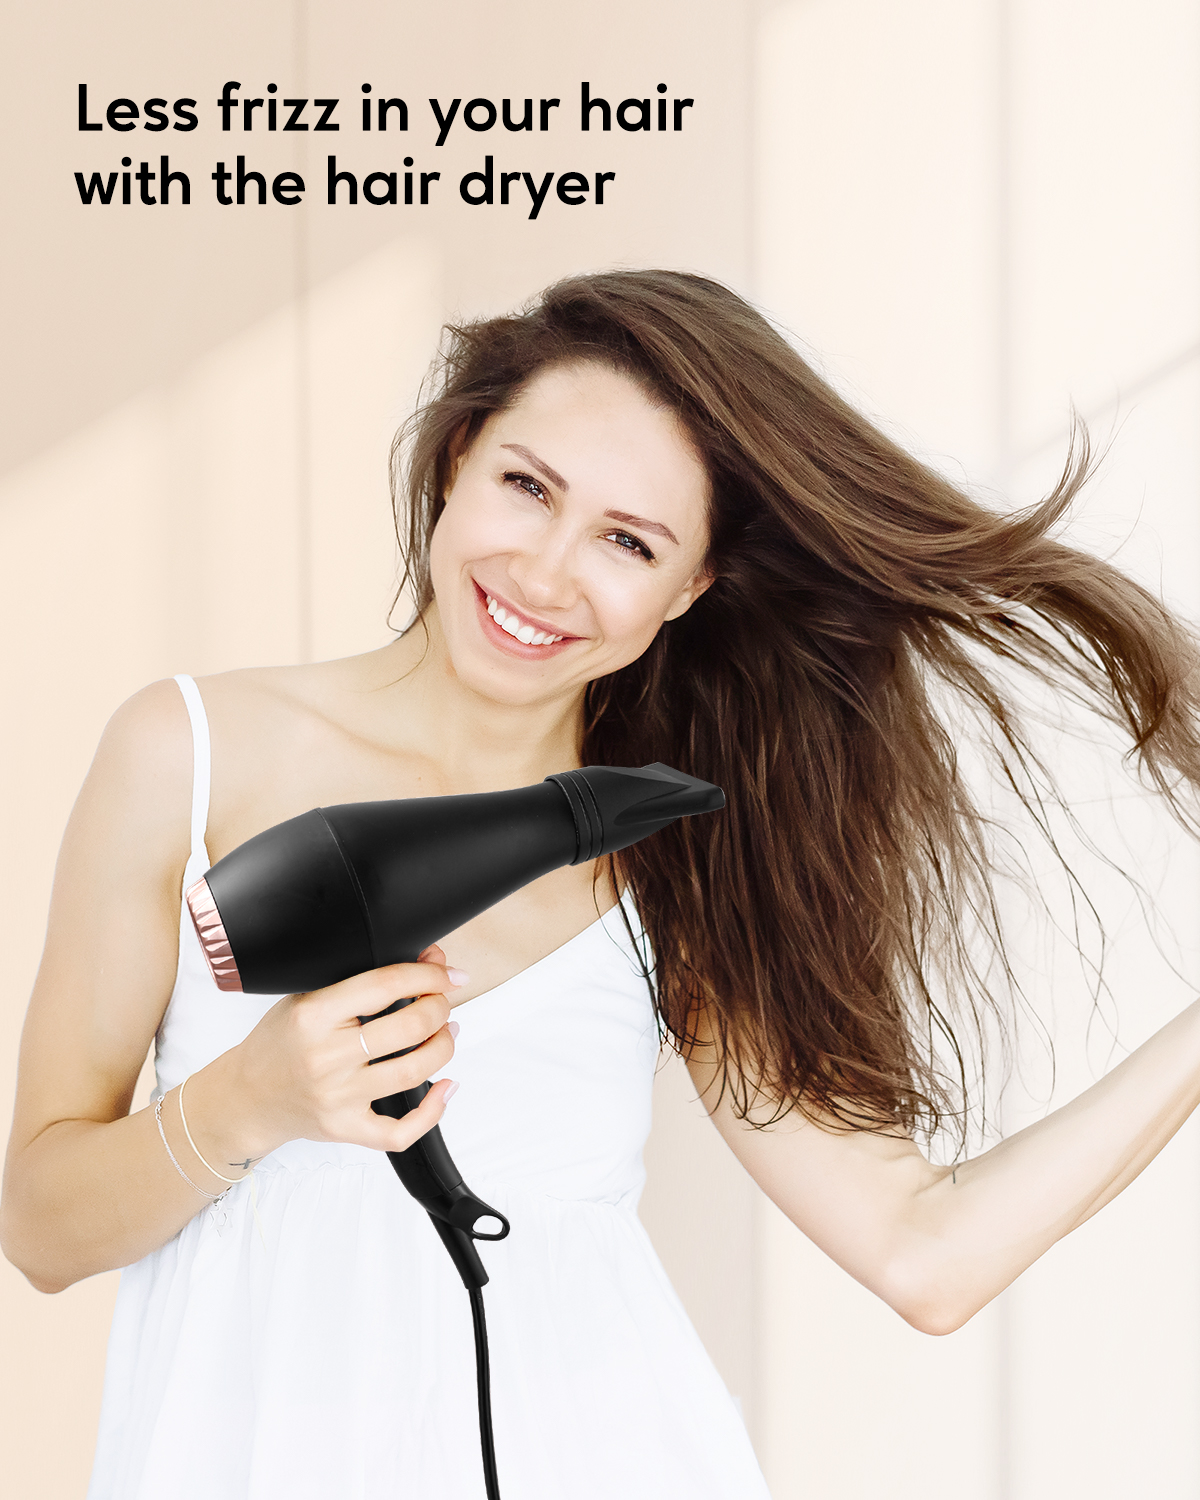 KIPOZI Professional Negative Ionic Hair Dryer - Black